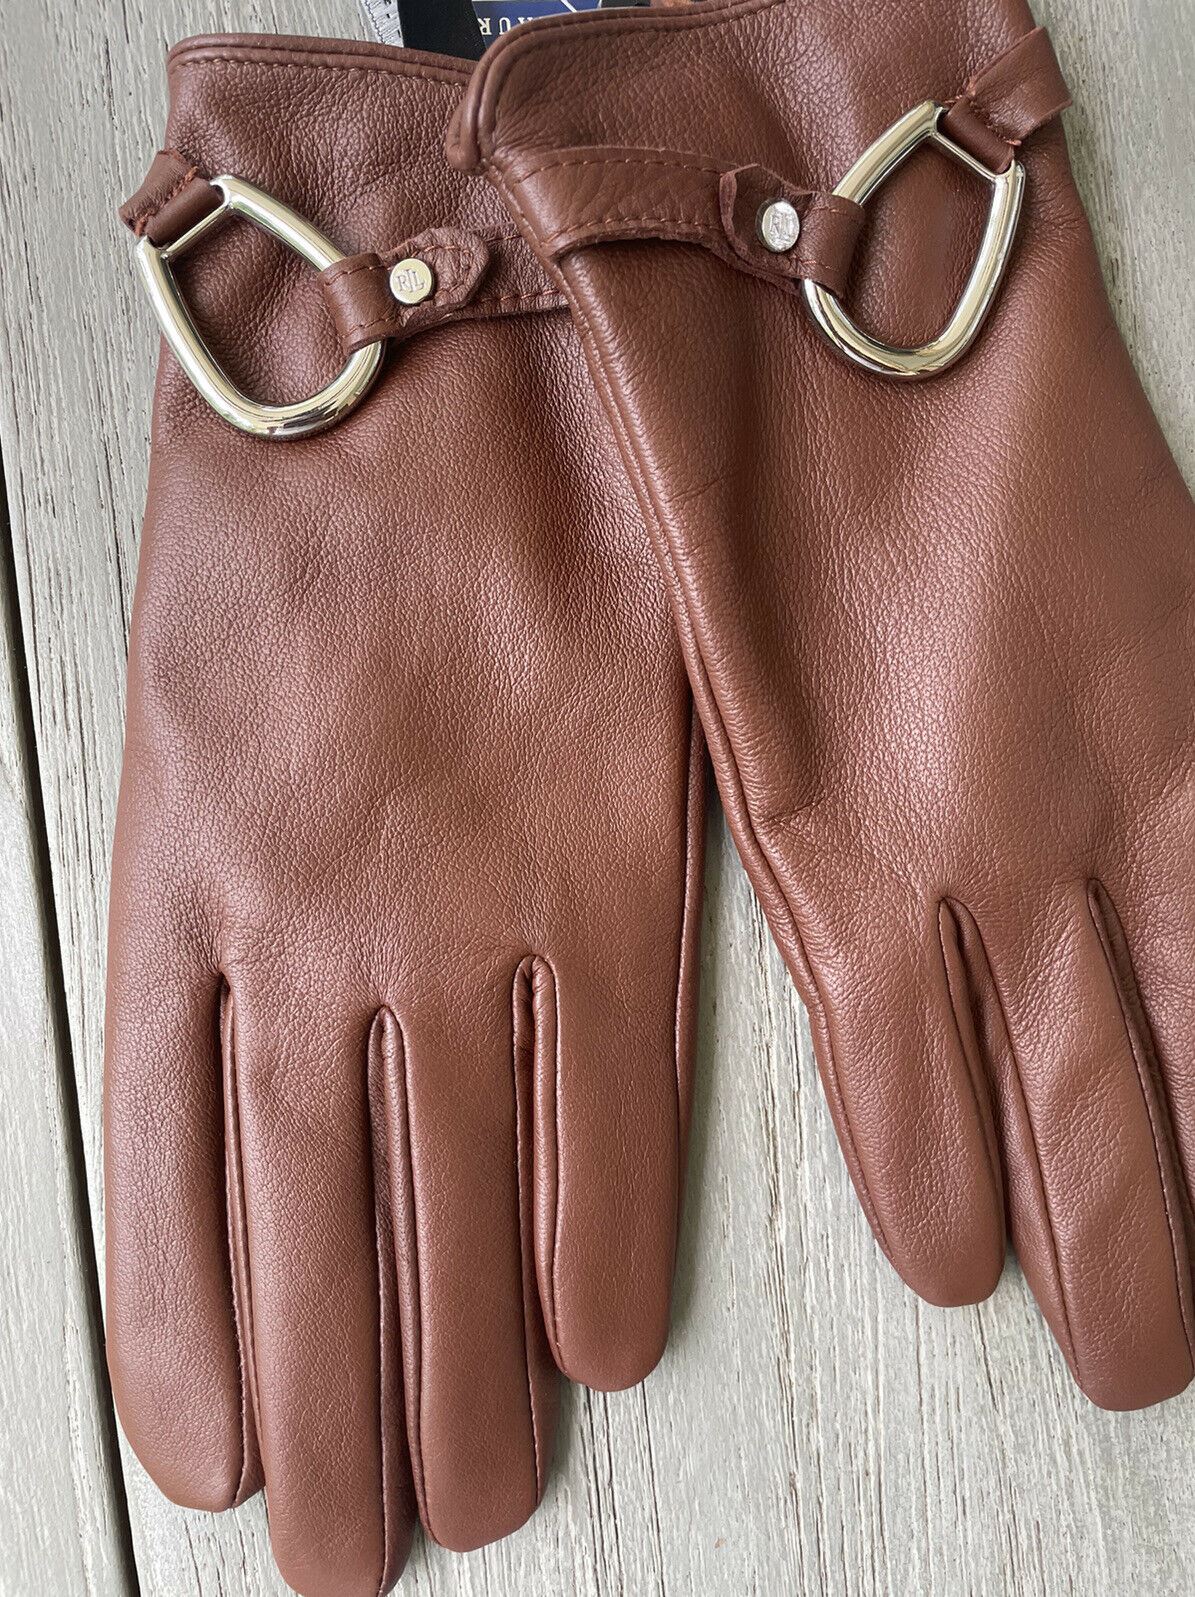 NWT $98 Lauren Ralph Lauren Women's 100% Sheep Leather Gloves Brown Size Large